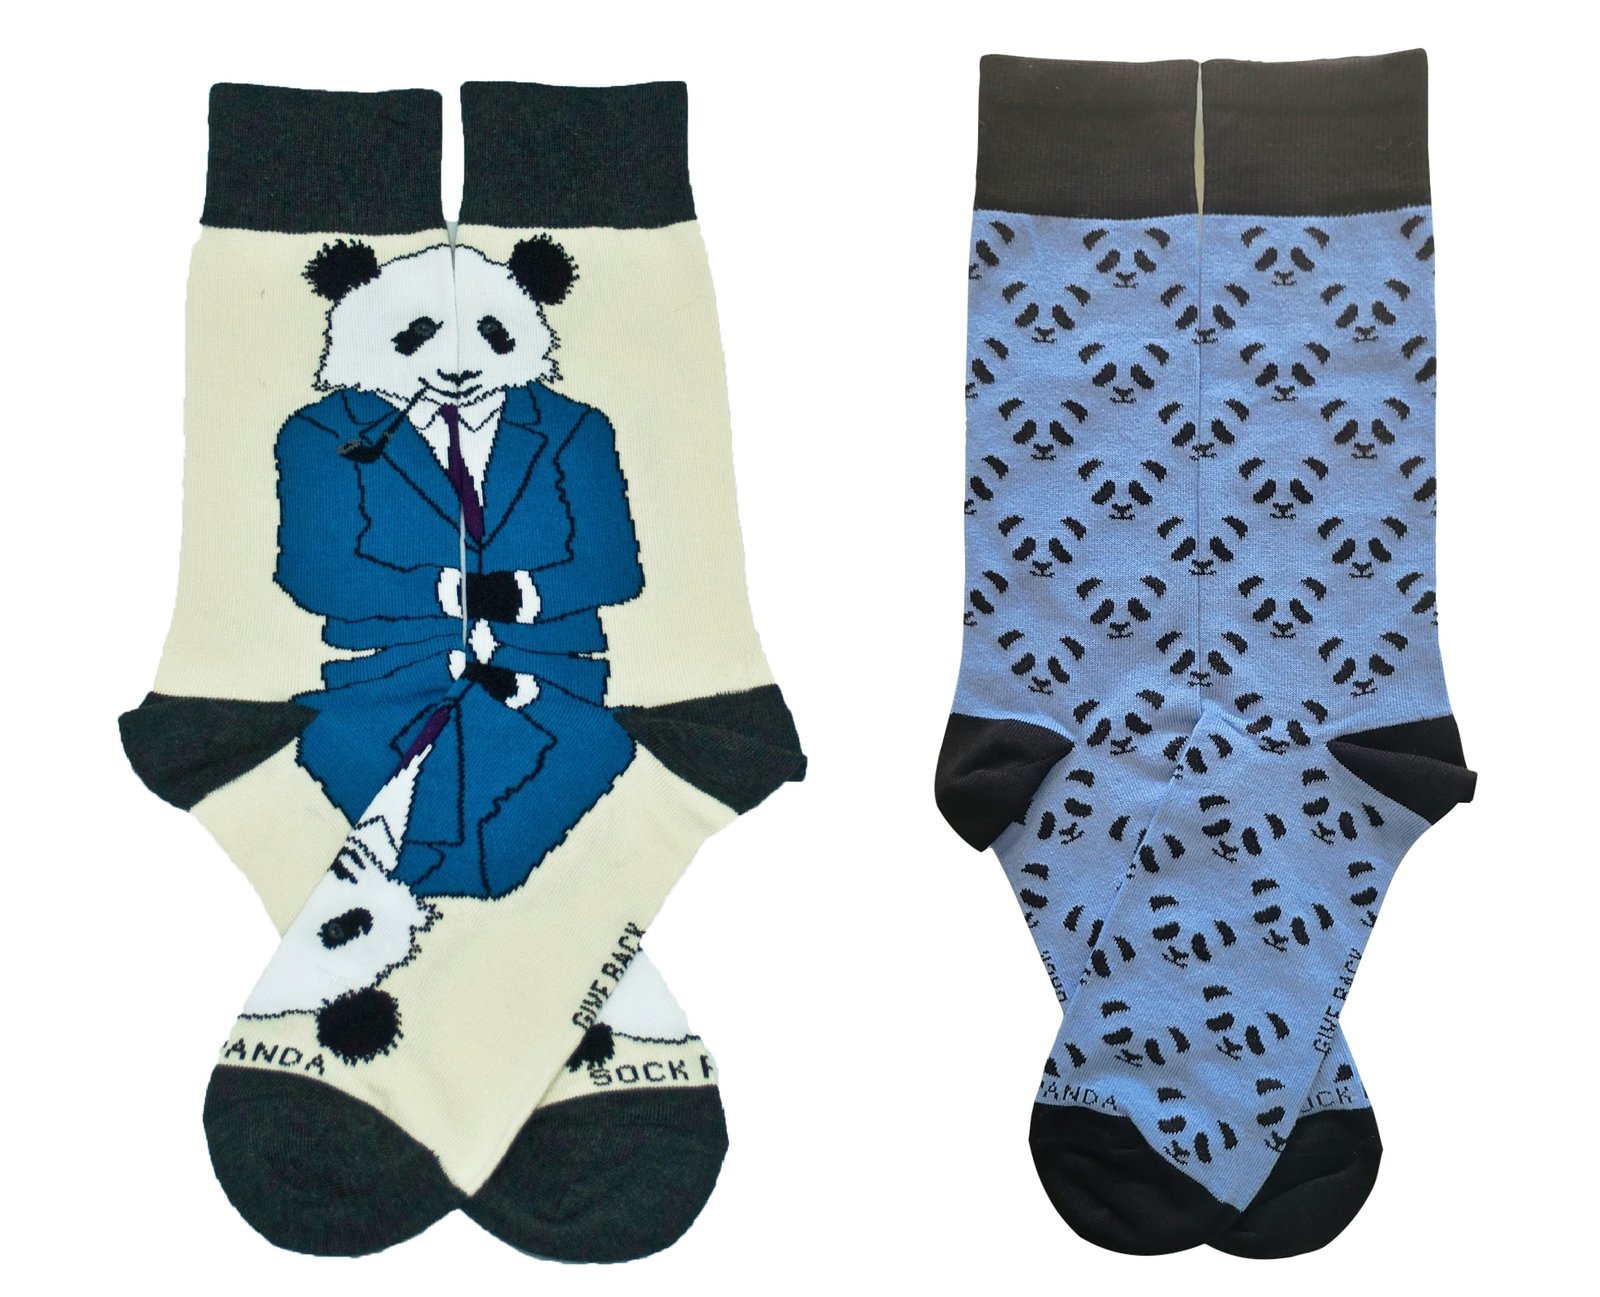 Amazing Panda Set (2-Pairs) of Socks from the Sock Panda (Adult Large)